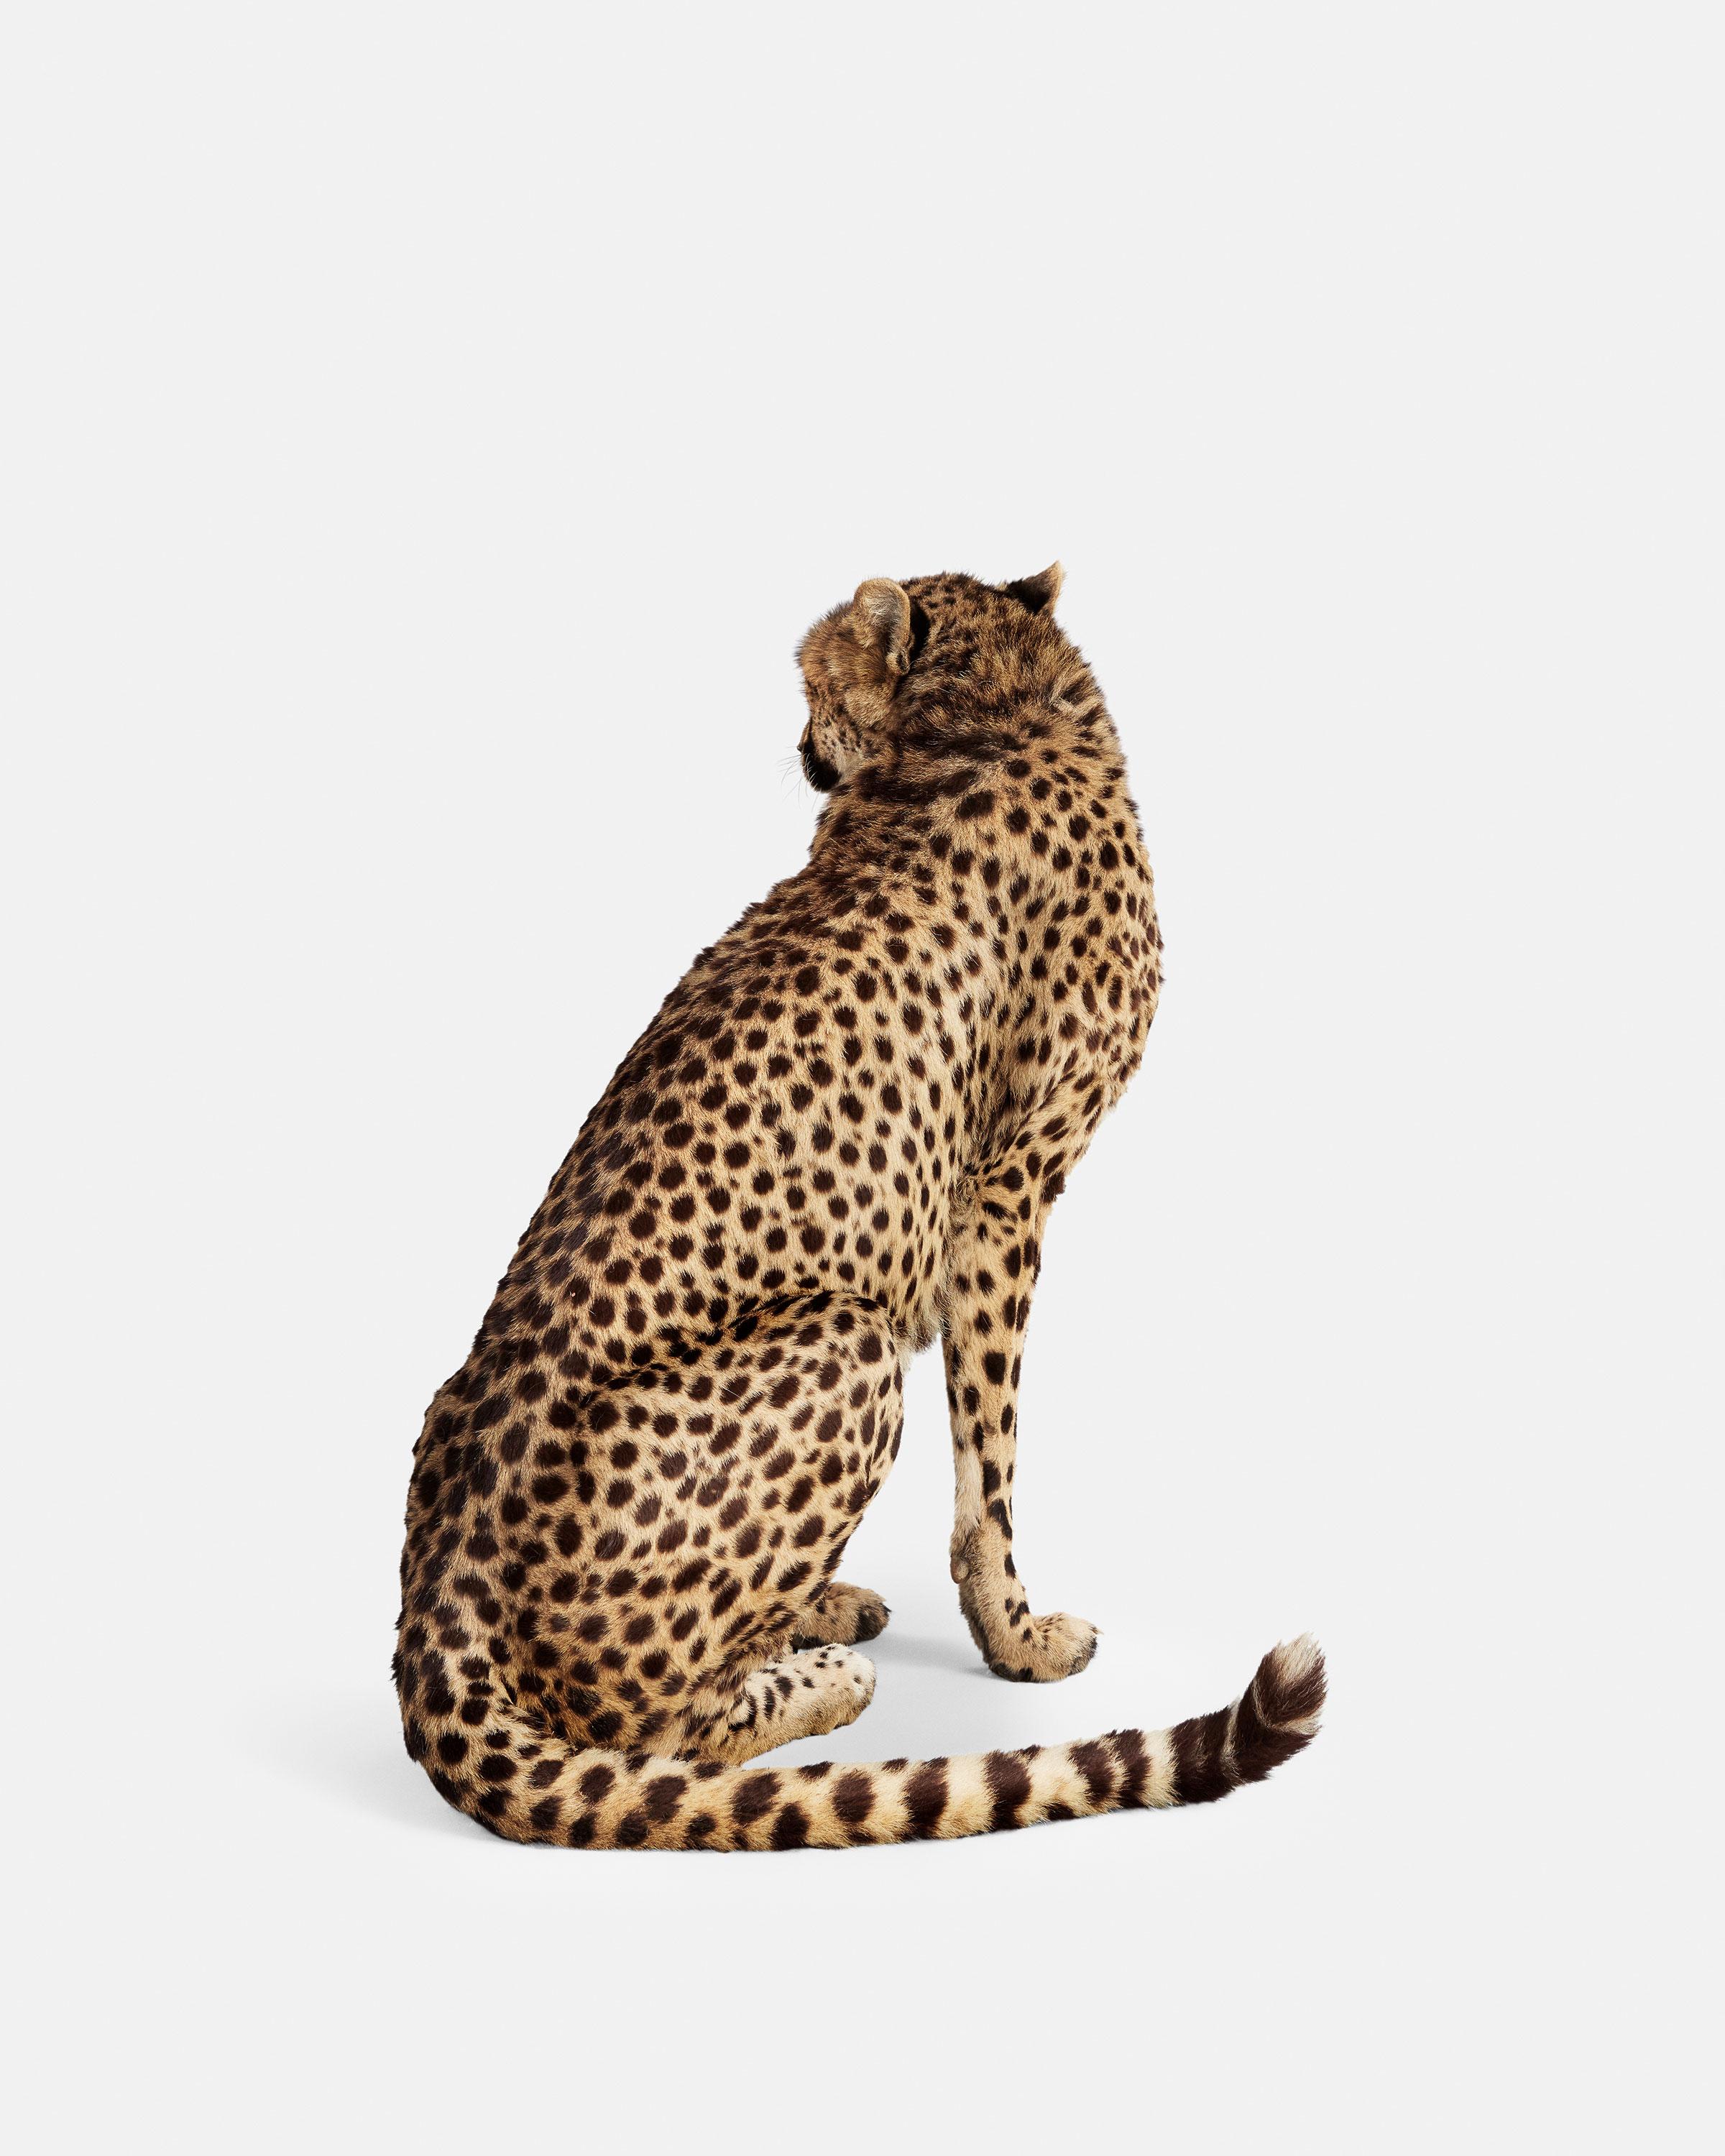 Randal Ford Animal Print - Cheetah No. 2 (37.5" x 30")